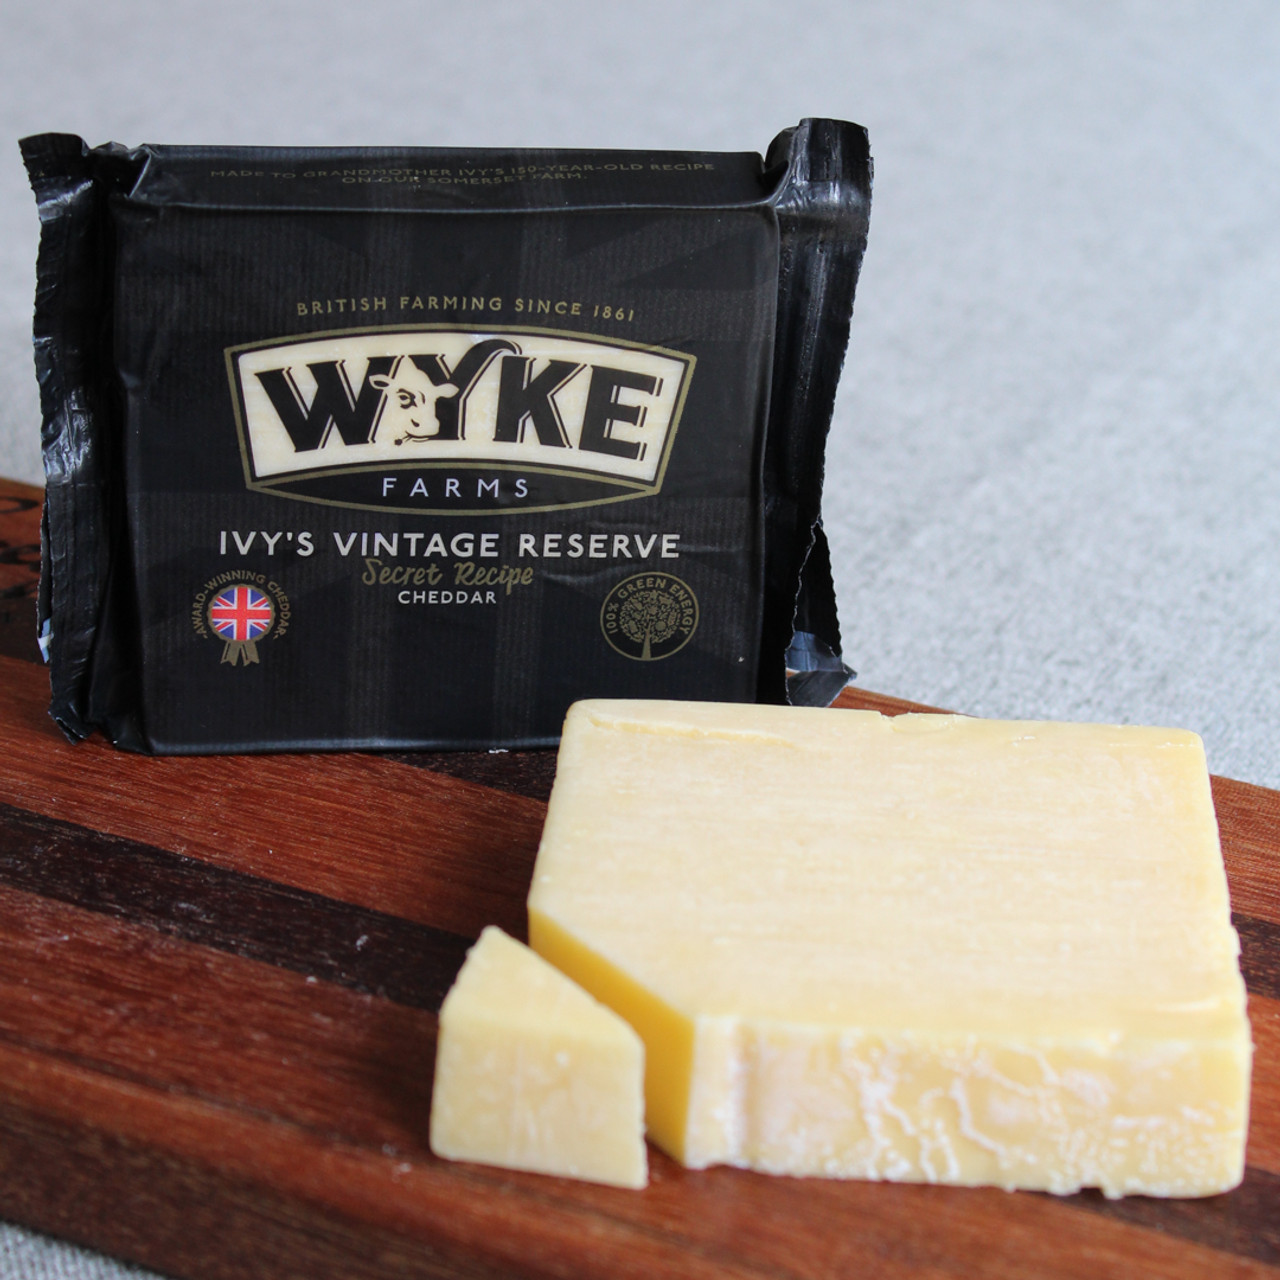 Wyke Farms Ivys Reserve Vintage Cheddar 200g The Cheese Shop